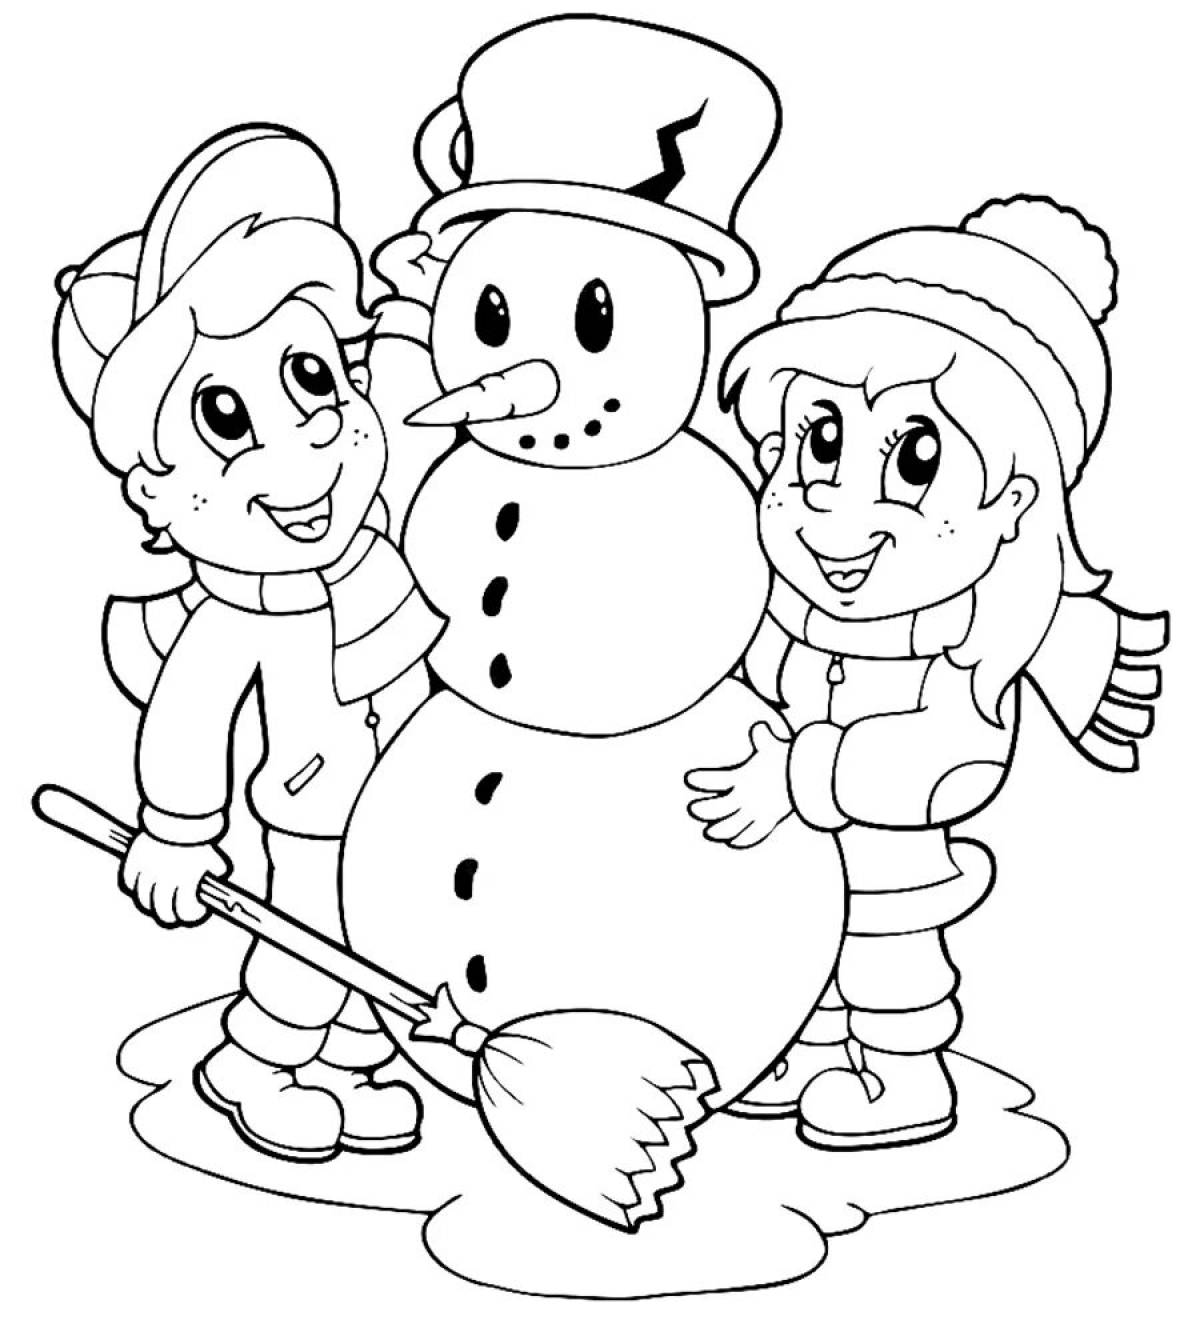 Snowman school #1